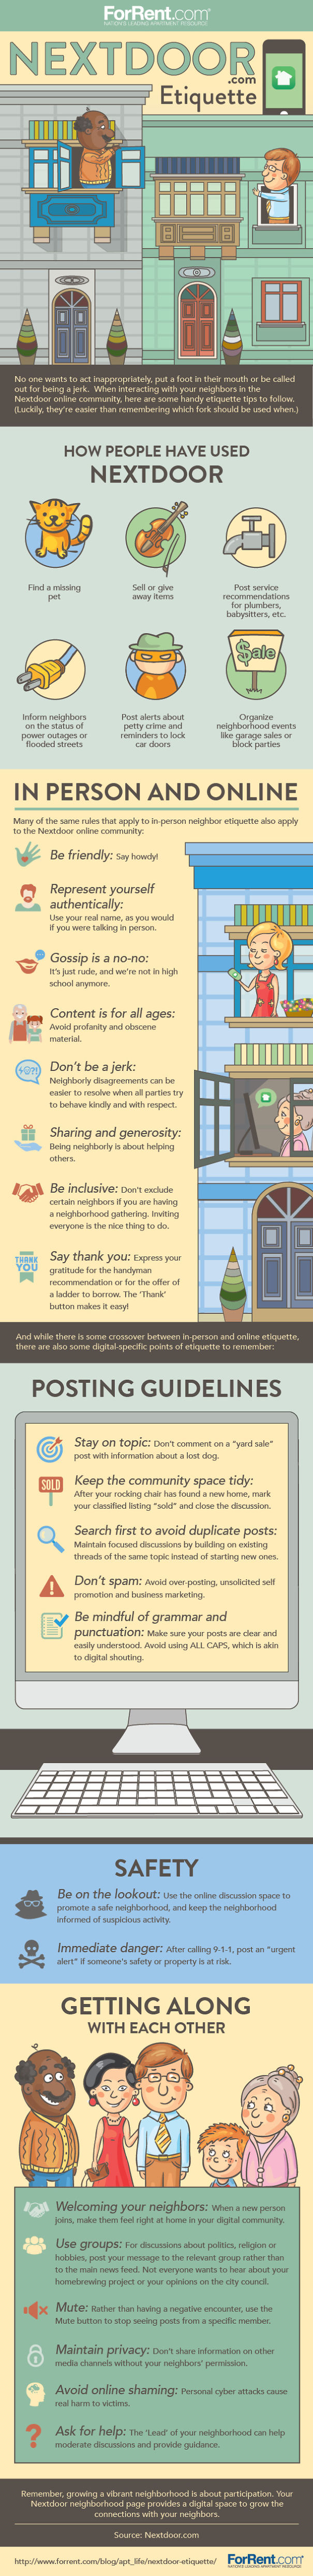 Etiquette Tips For Interacting On The Nextdoor Community